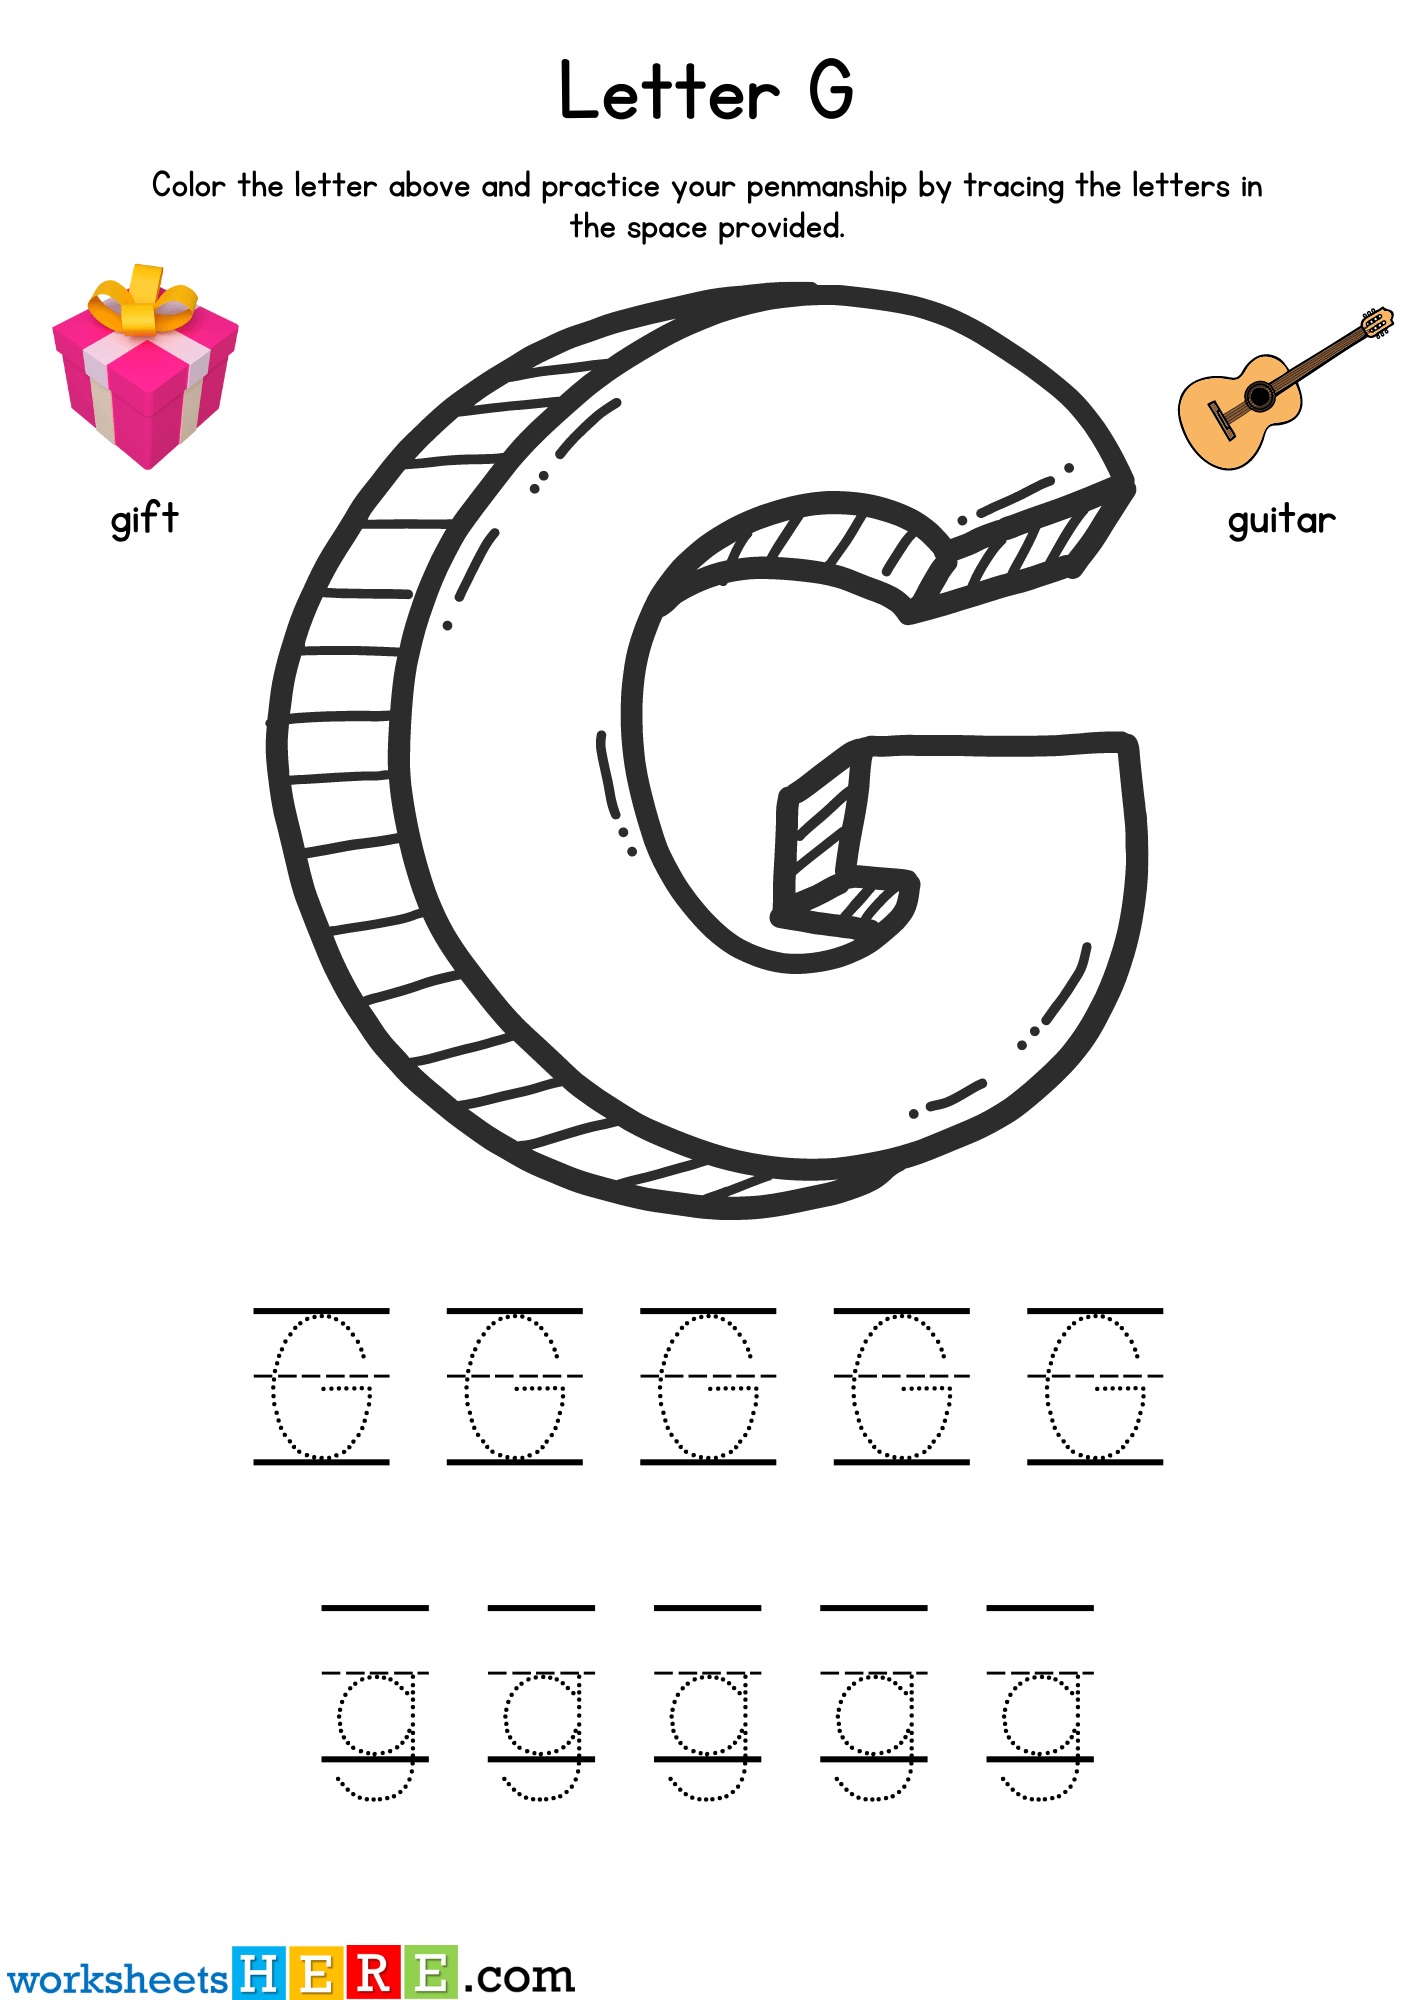 Color and Trace Letter G Exercises PDF Worksheet For Kindergarten and Kids